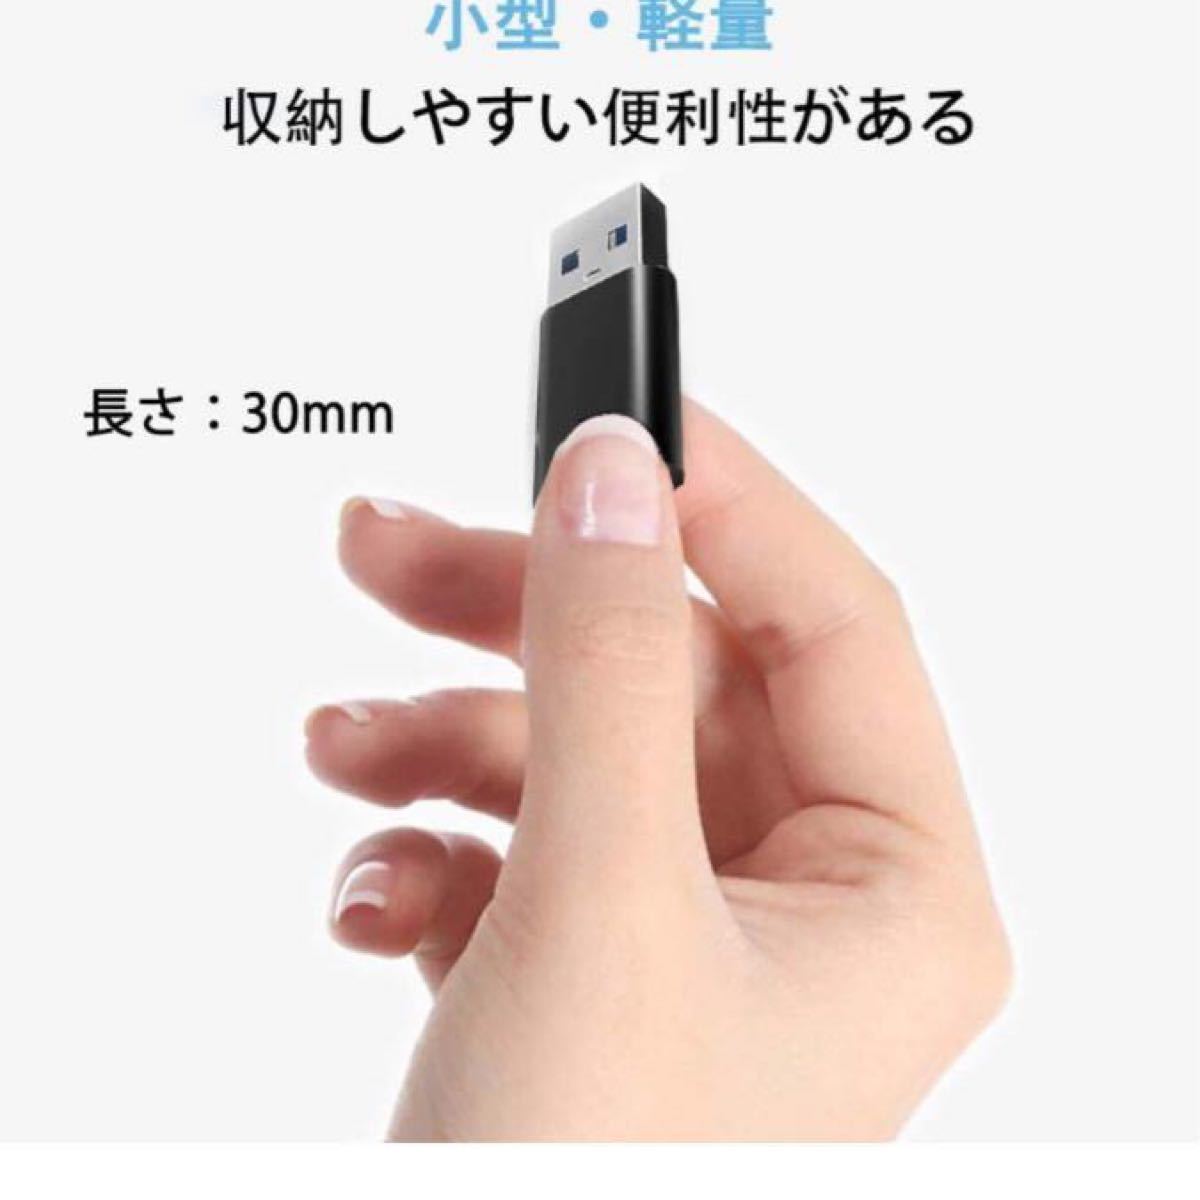 Type C(メス) to USB(オス) 変換アダプタ 3個セット